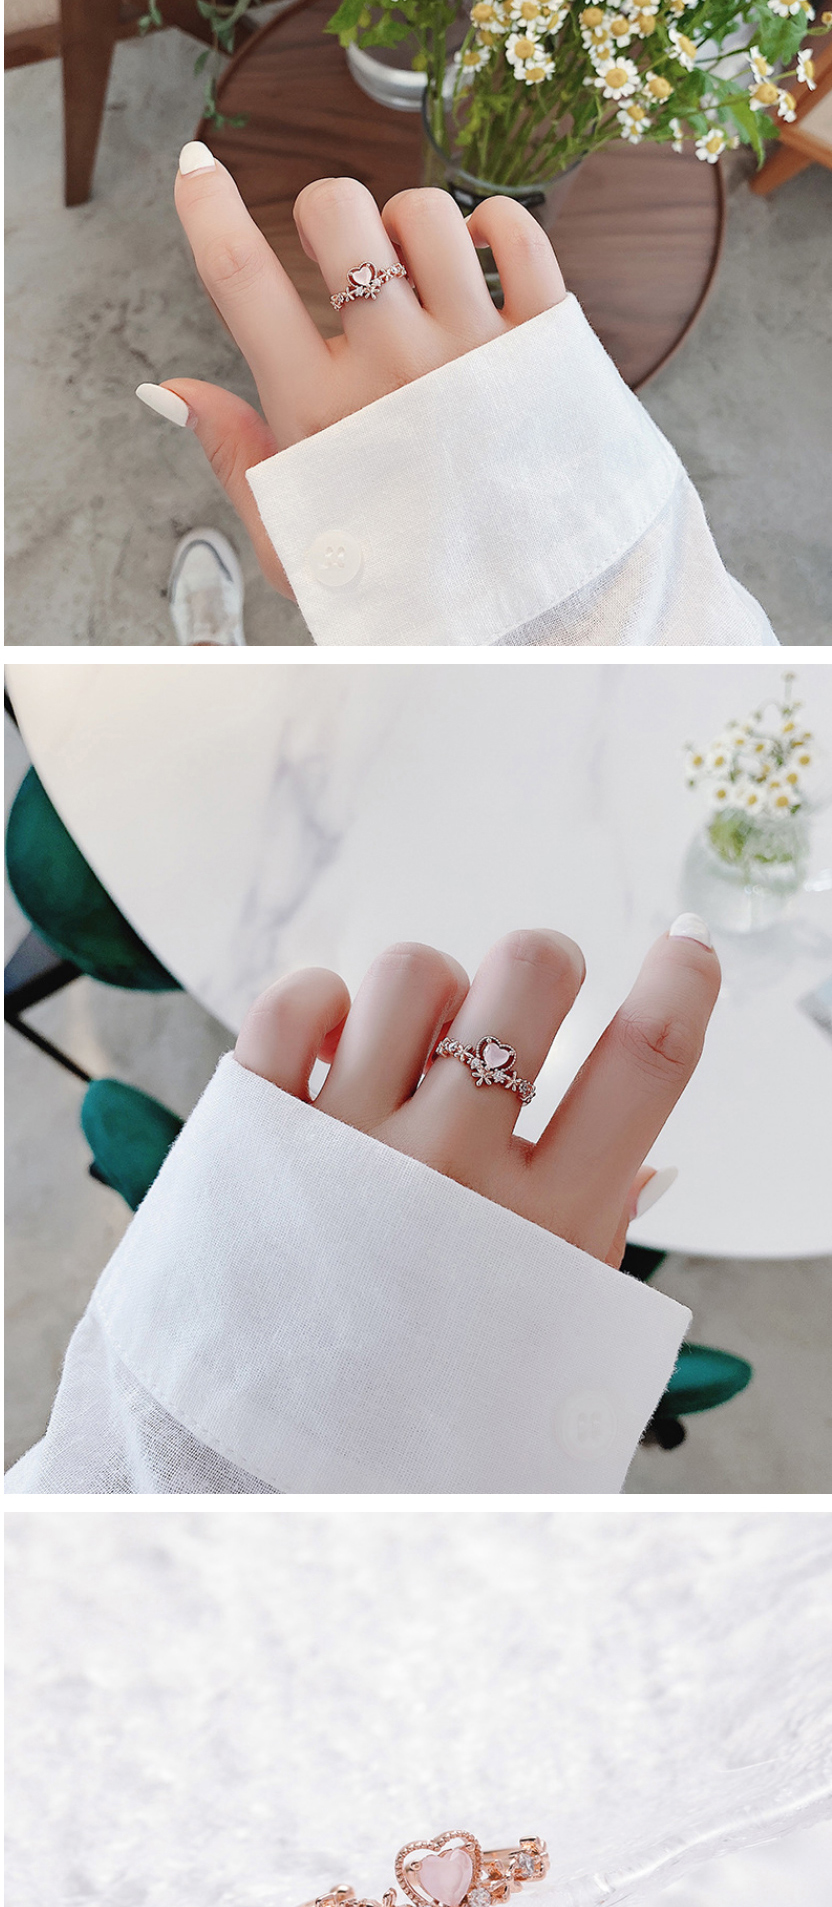 Fashion Rose Gold Sparkling Diamond Zircon Flower Ring,Fashion Rings